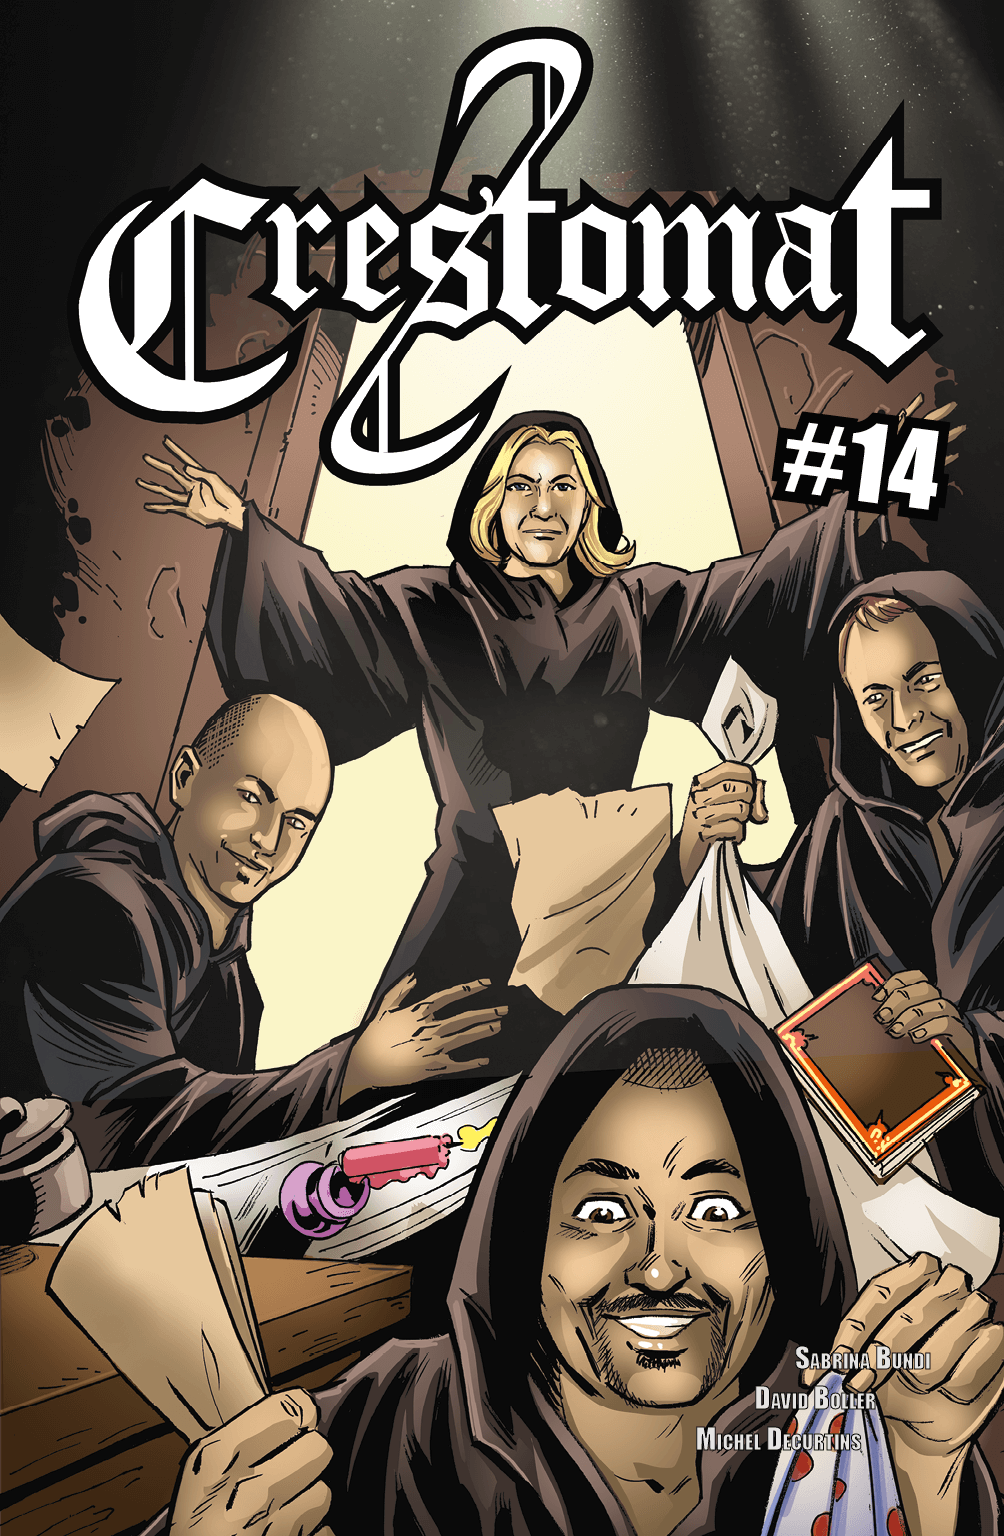 2017 Crestomat 14 Cover